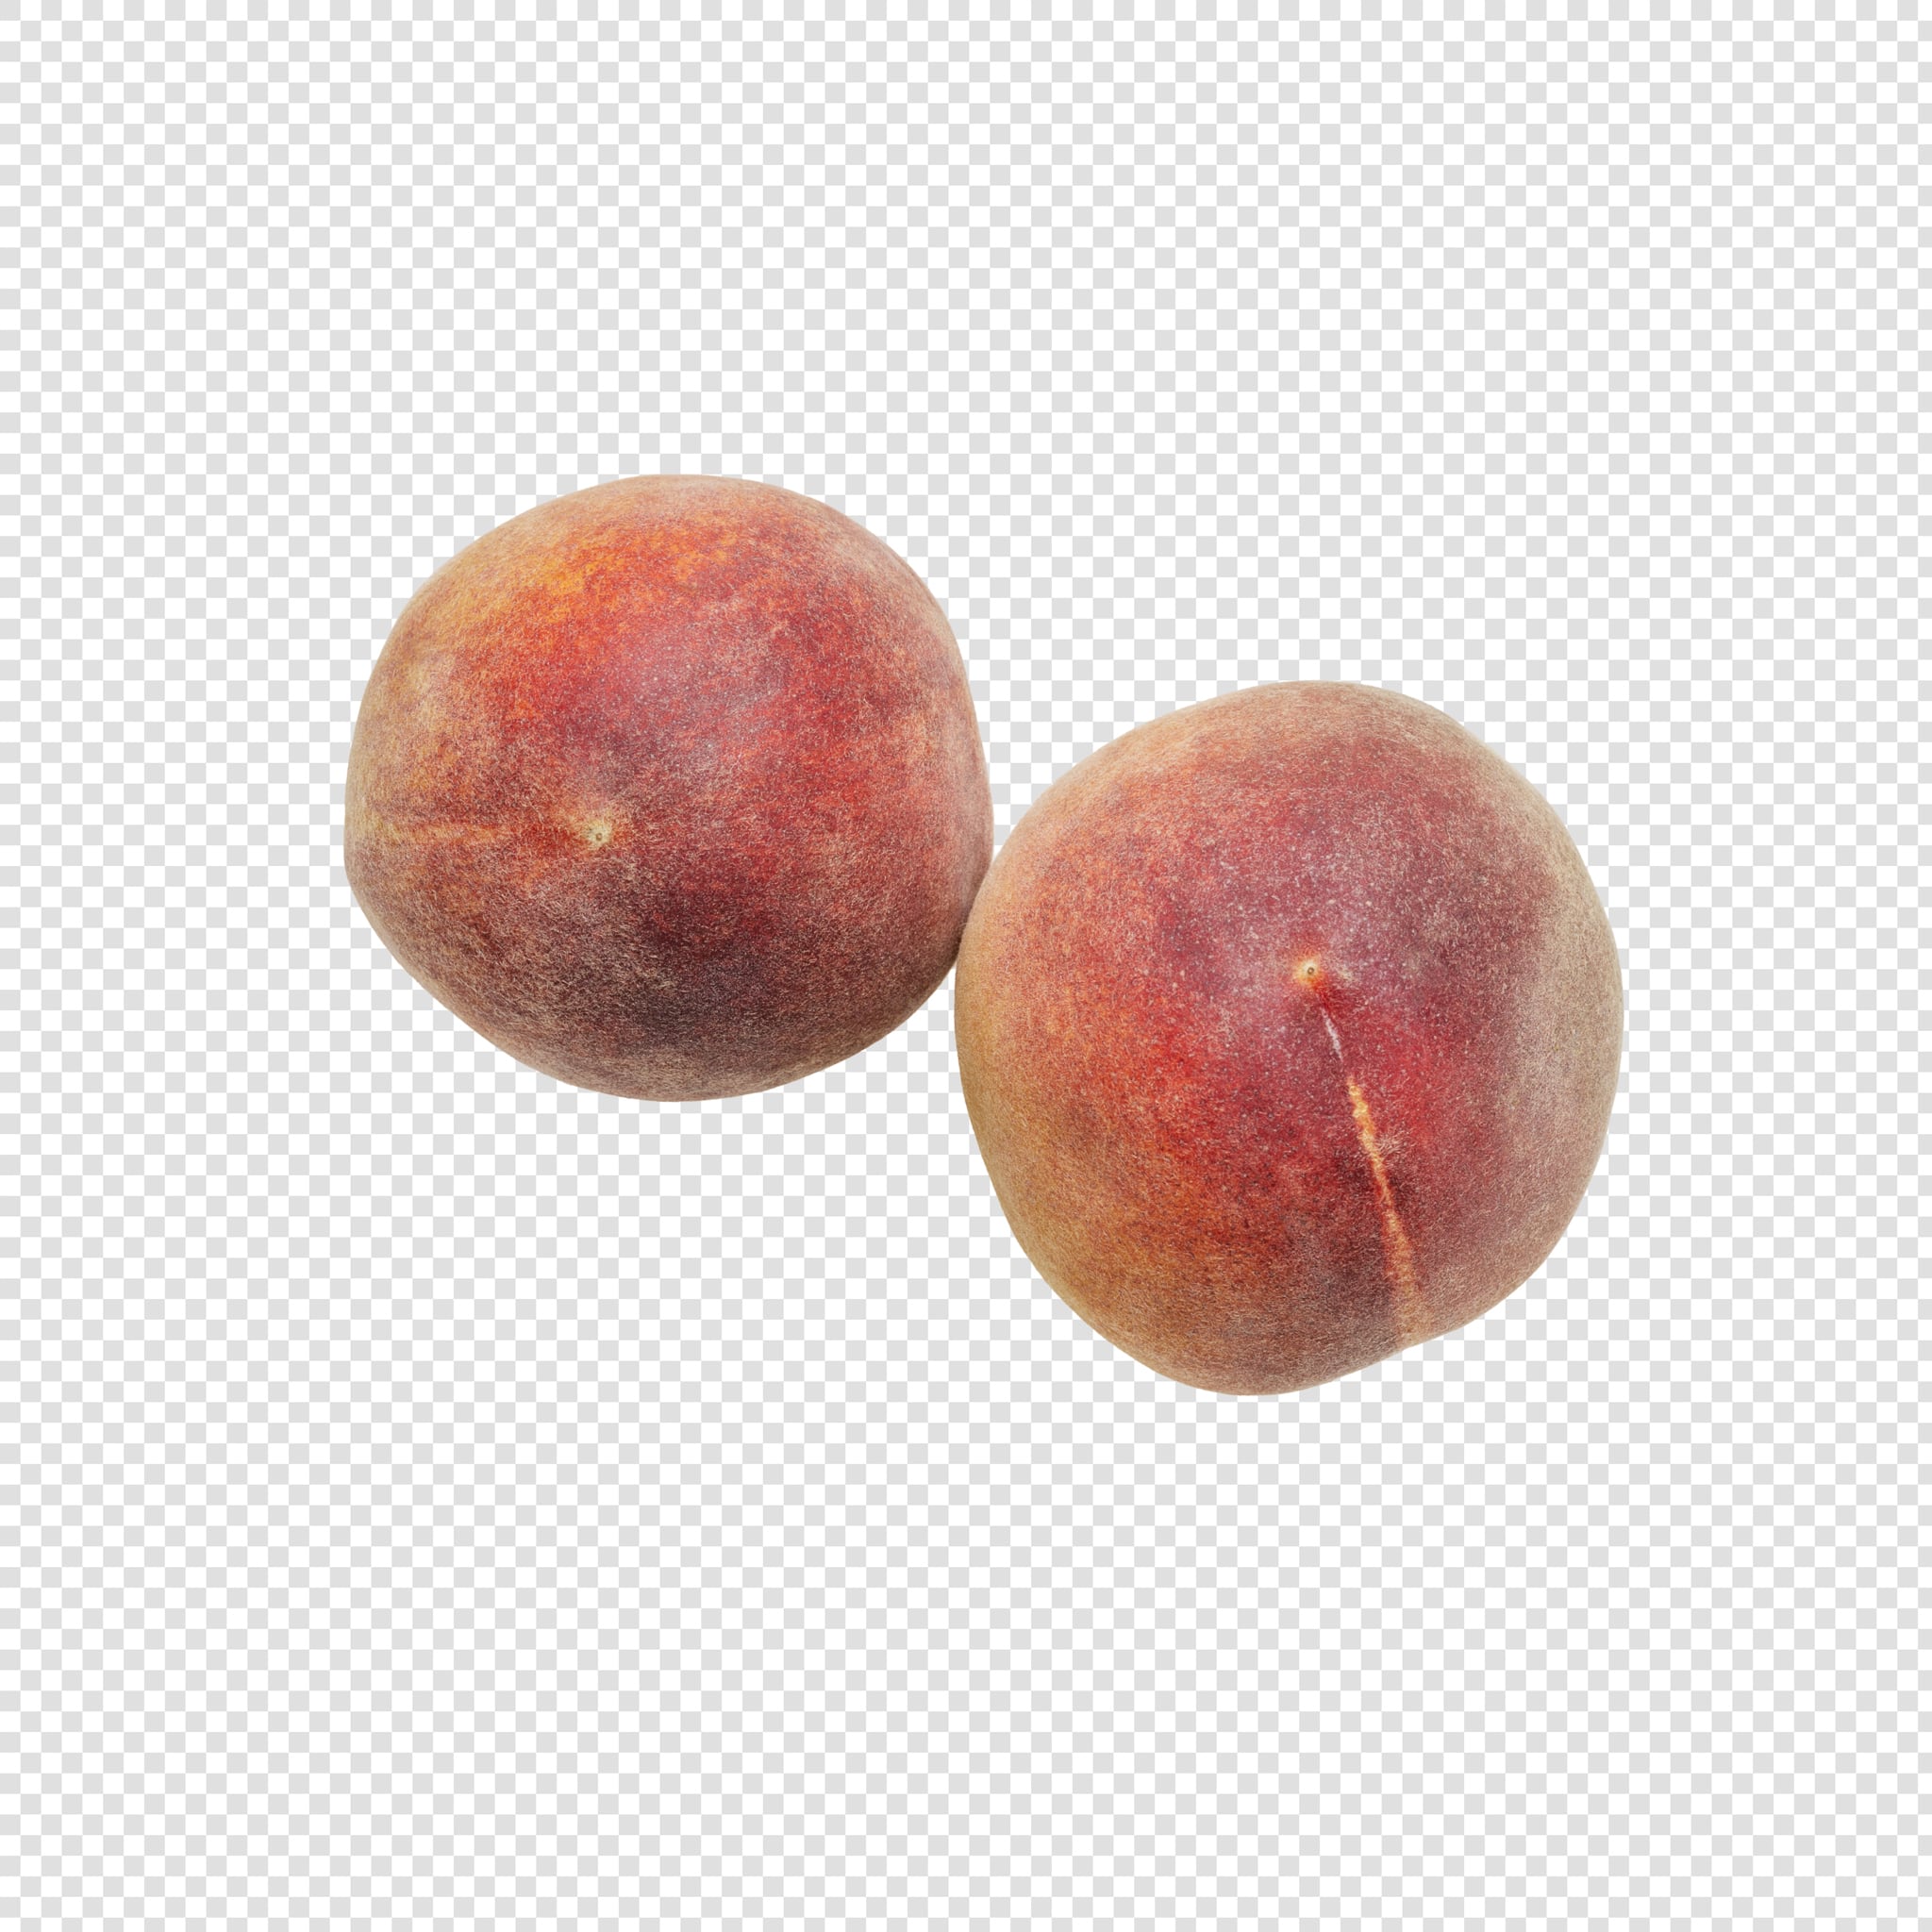 PSD Layered Peach image